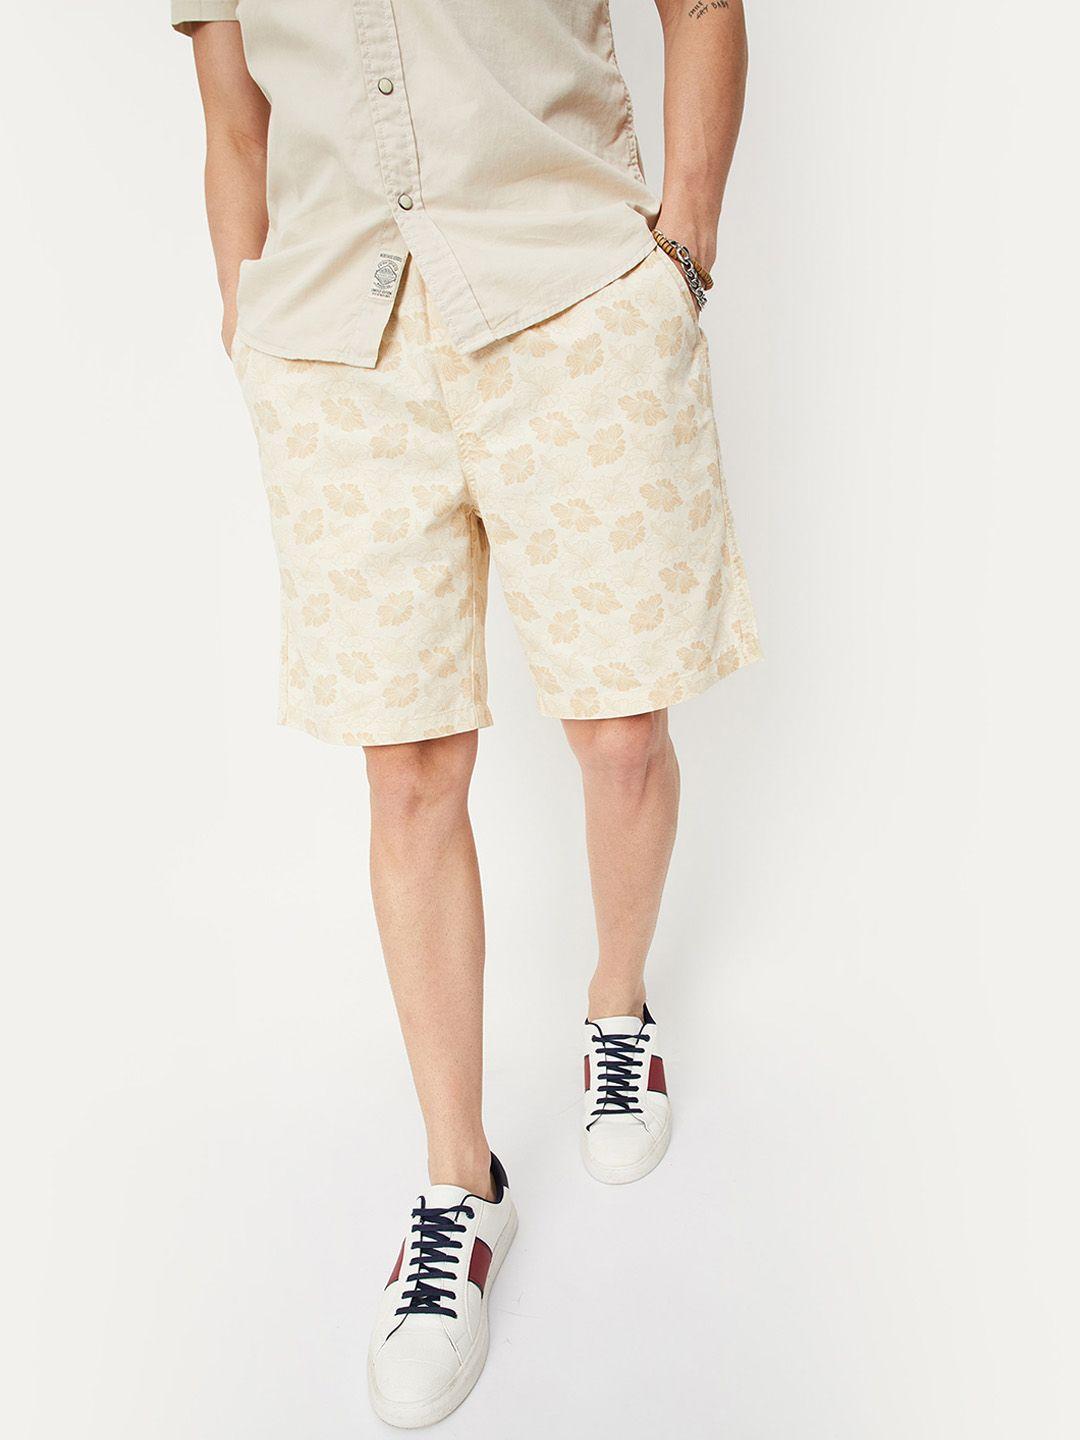 max men conversational printed pure cotton shorts